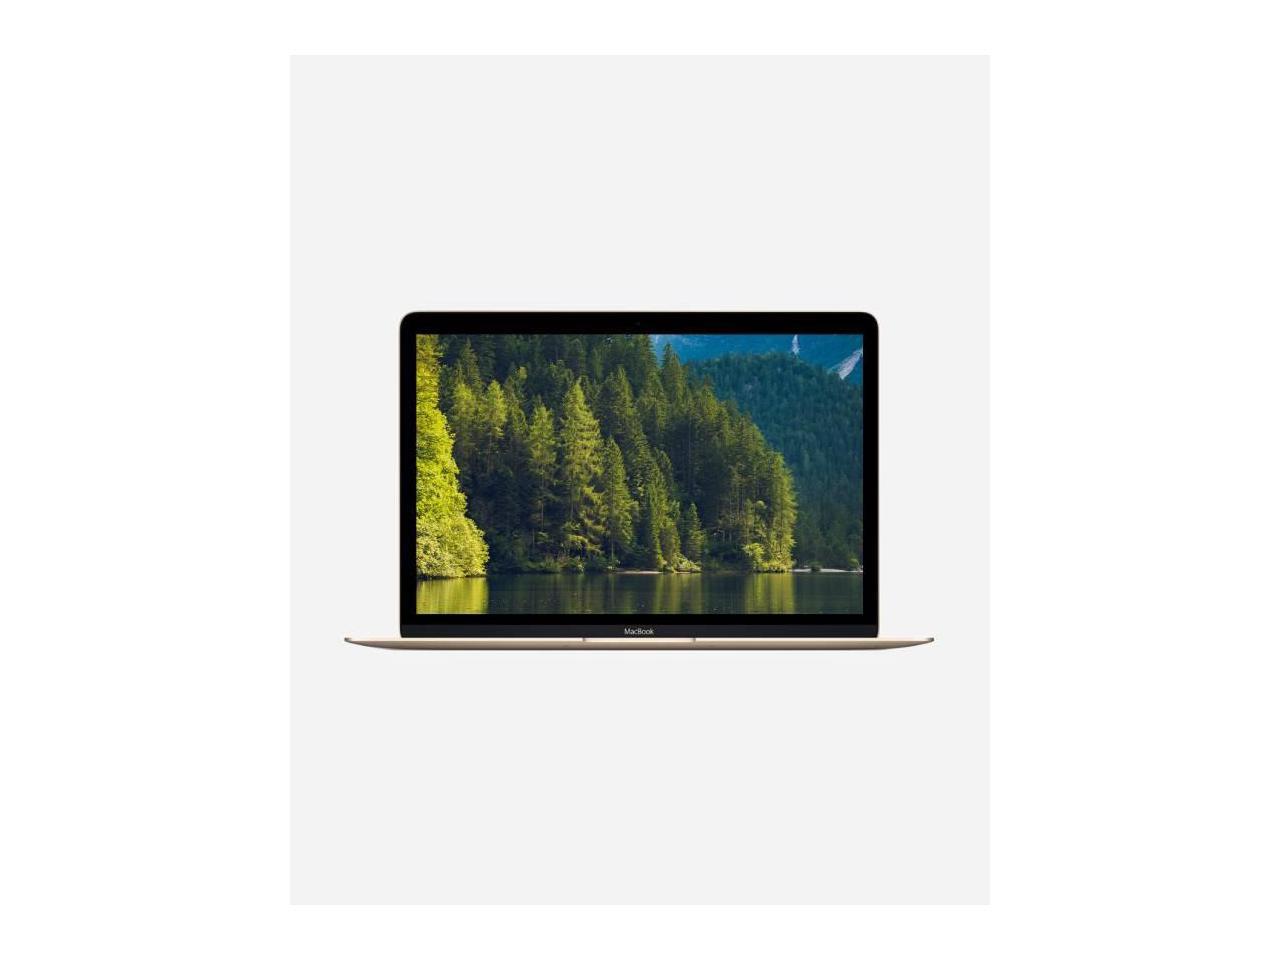 Refurbished Apple A Grade Macbook 12 Inch Retina Gold 1 4ghz Dual Core I7 Mid 17 Mnyl2ll A Bto 512gb Ssd 8gb Memory 2304x1440 Display Mac Os Power Adatper Included Newegg Com